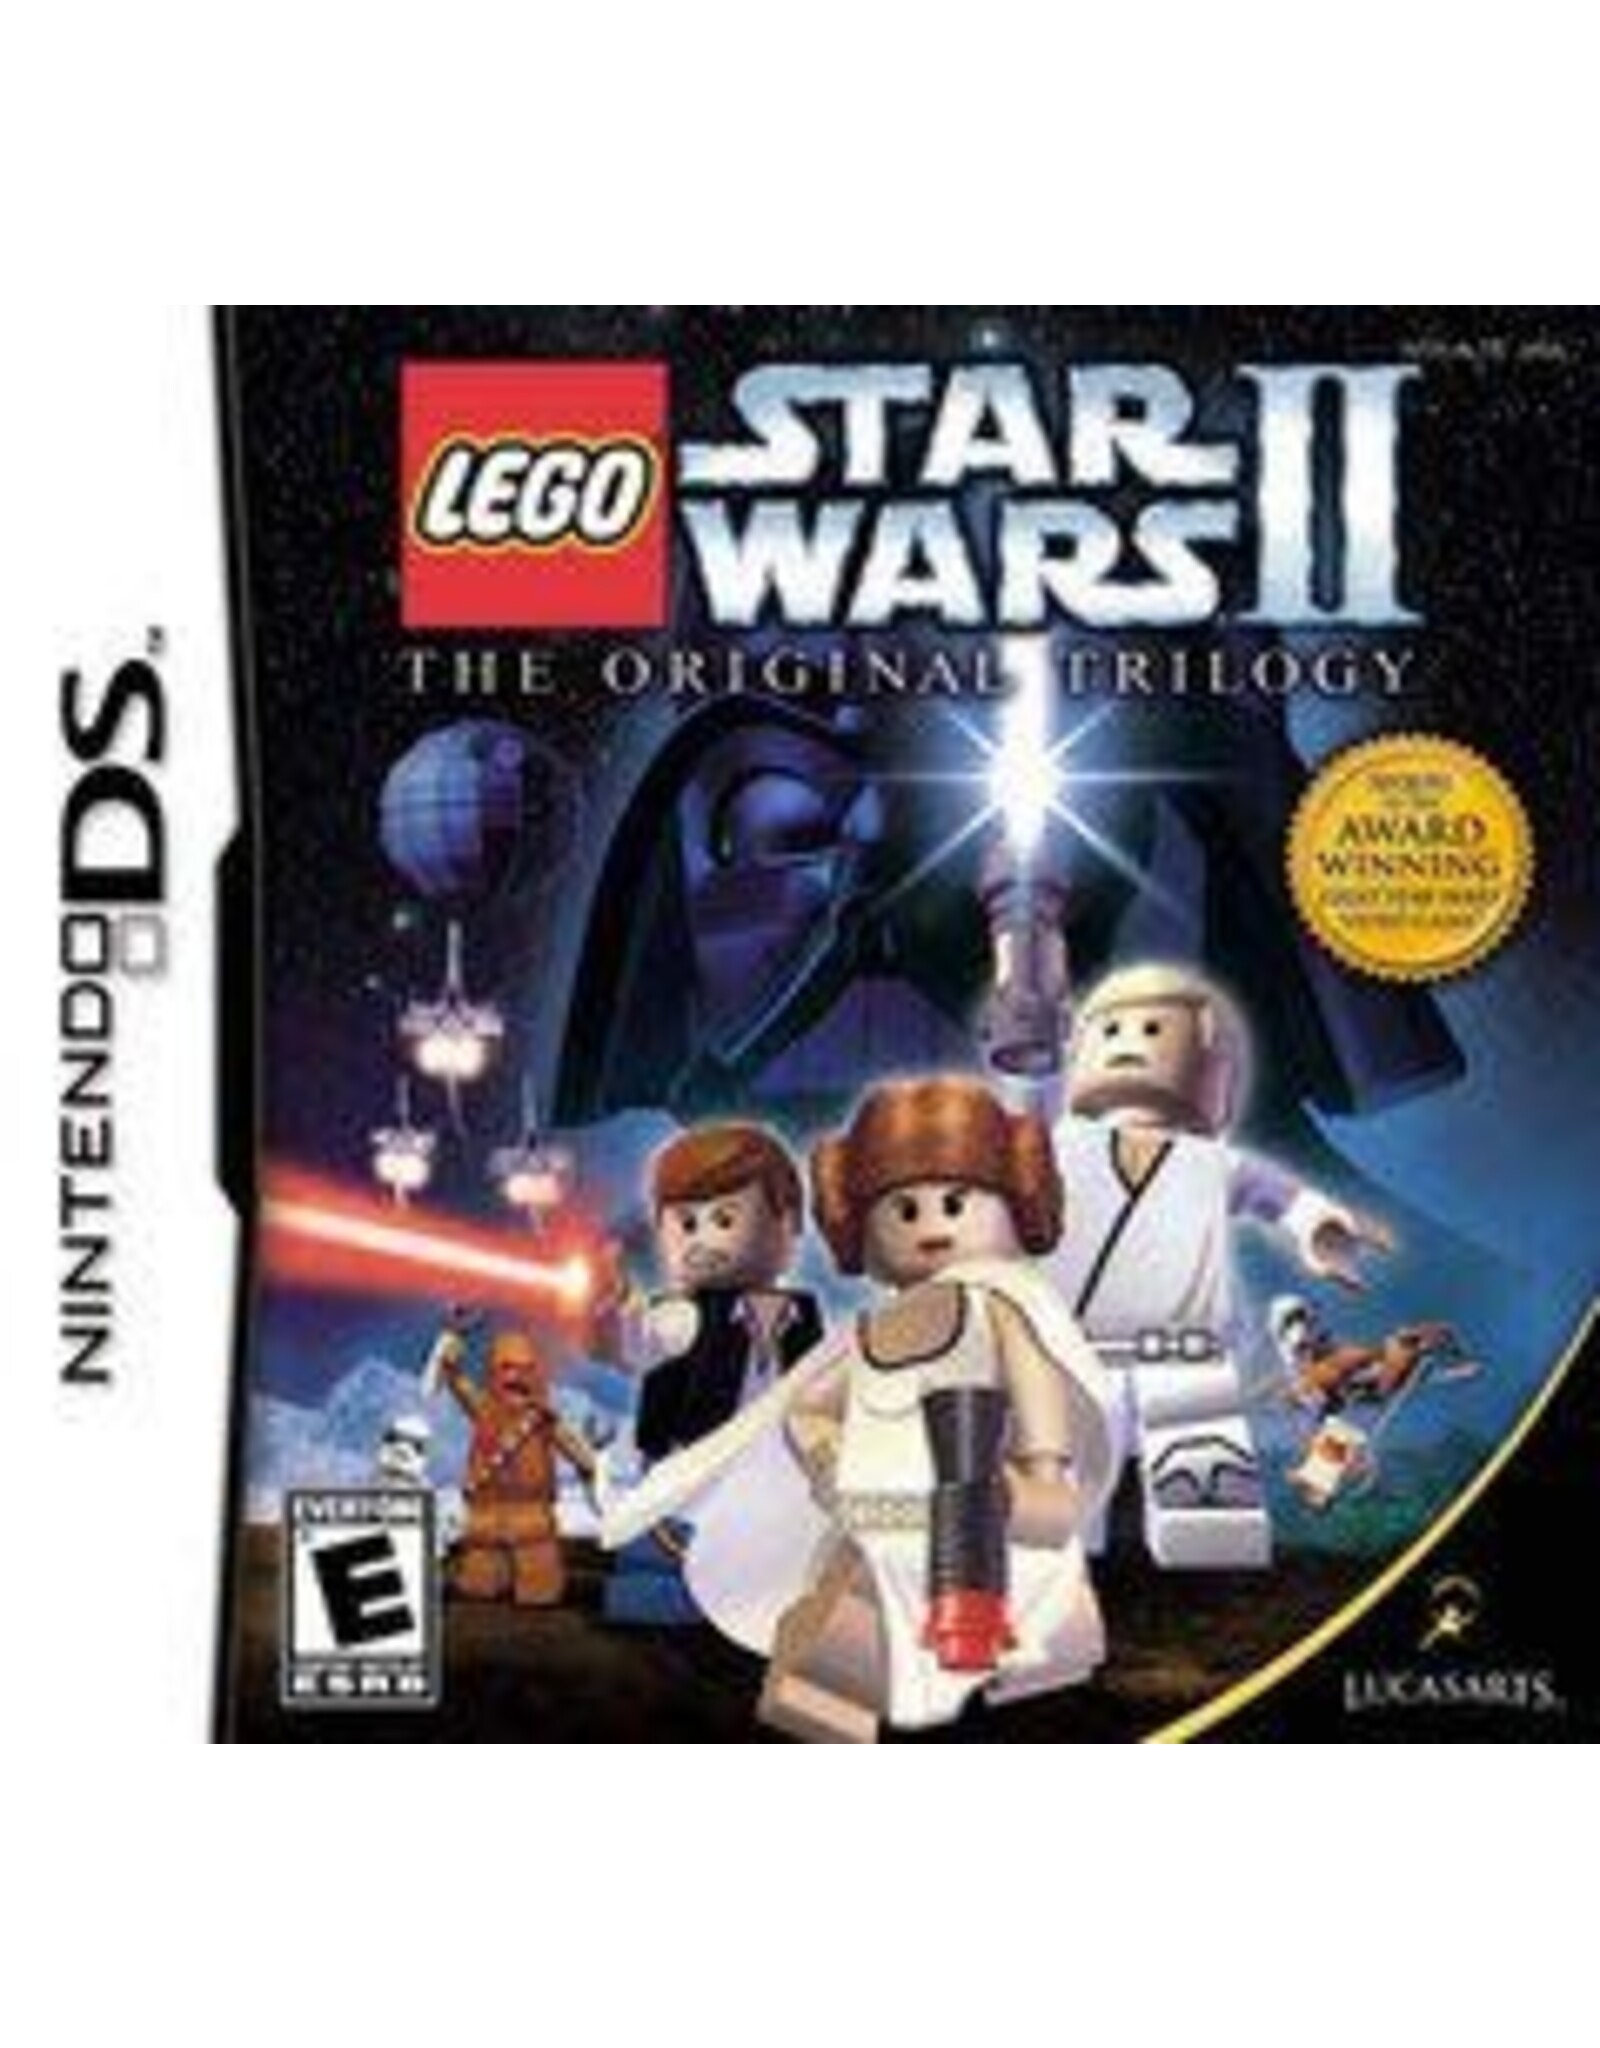 Nintendo DS LEGO Star Wars II Original Trilogy (No Manual)